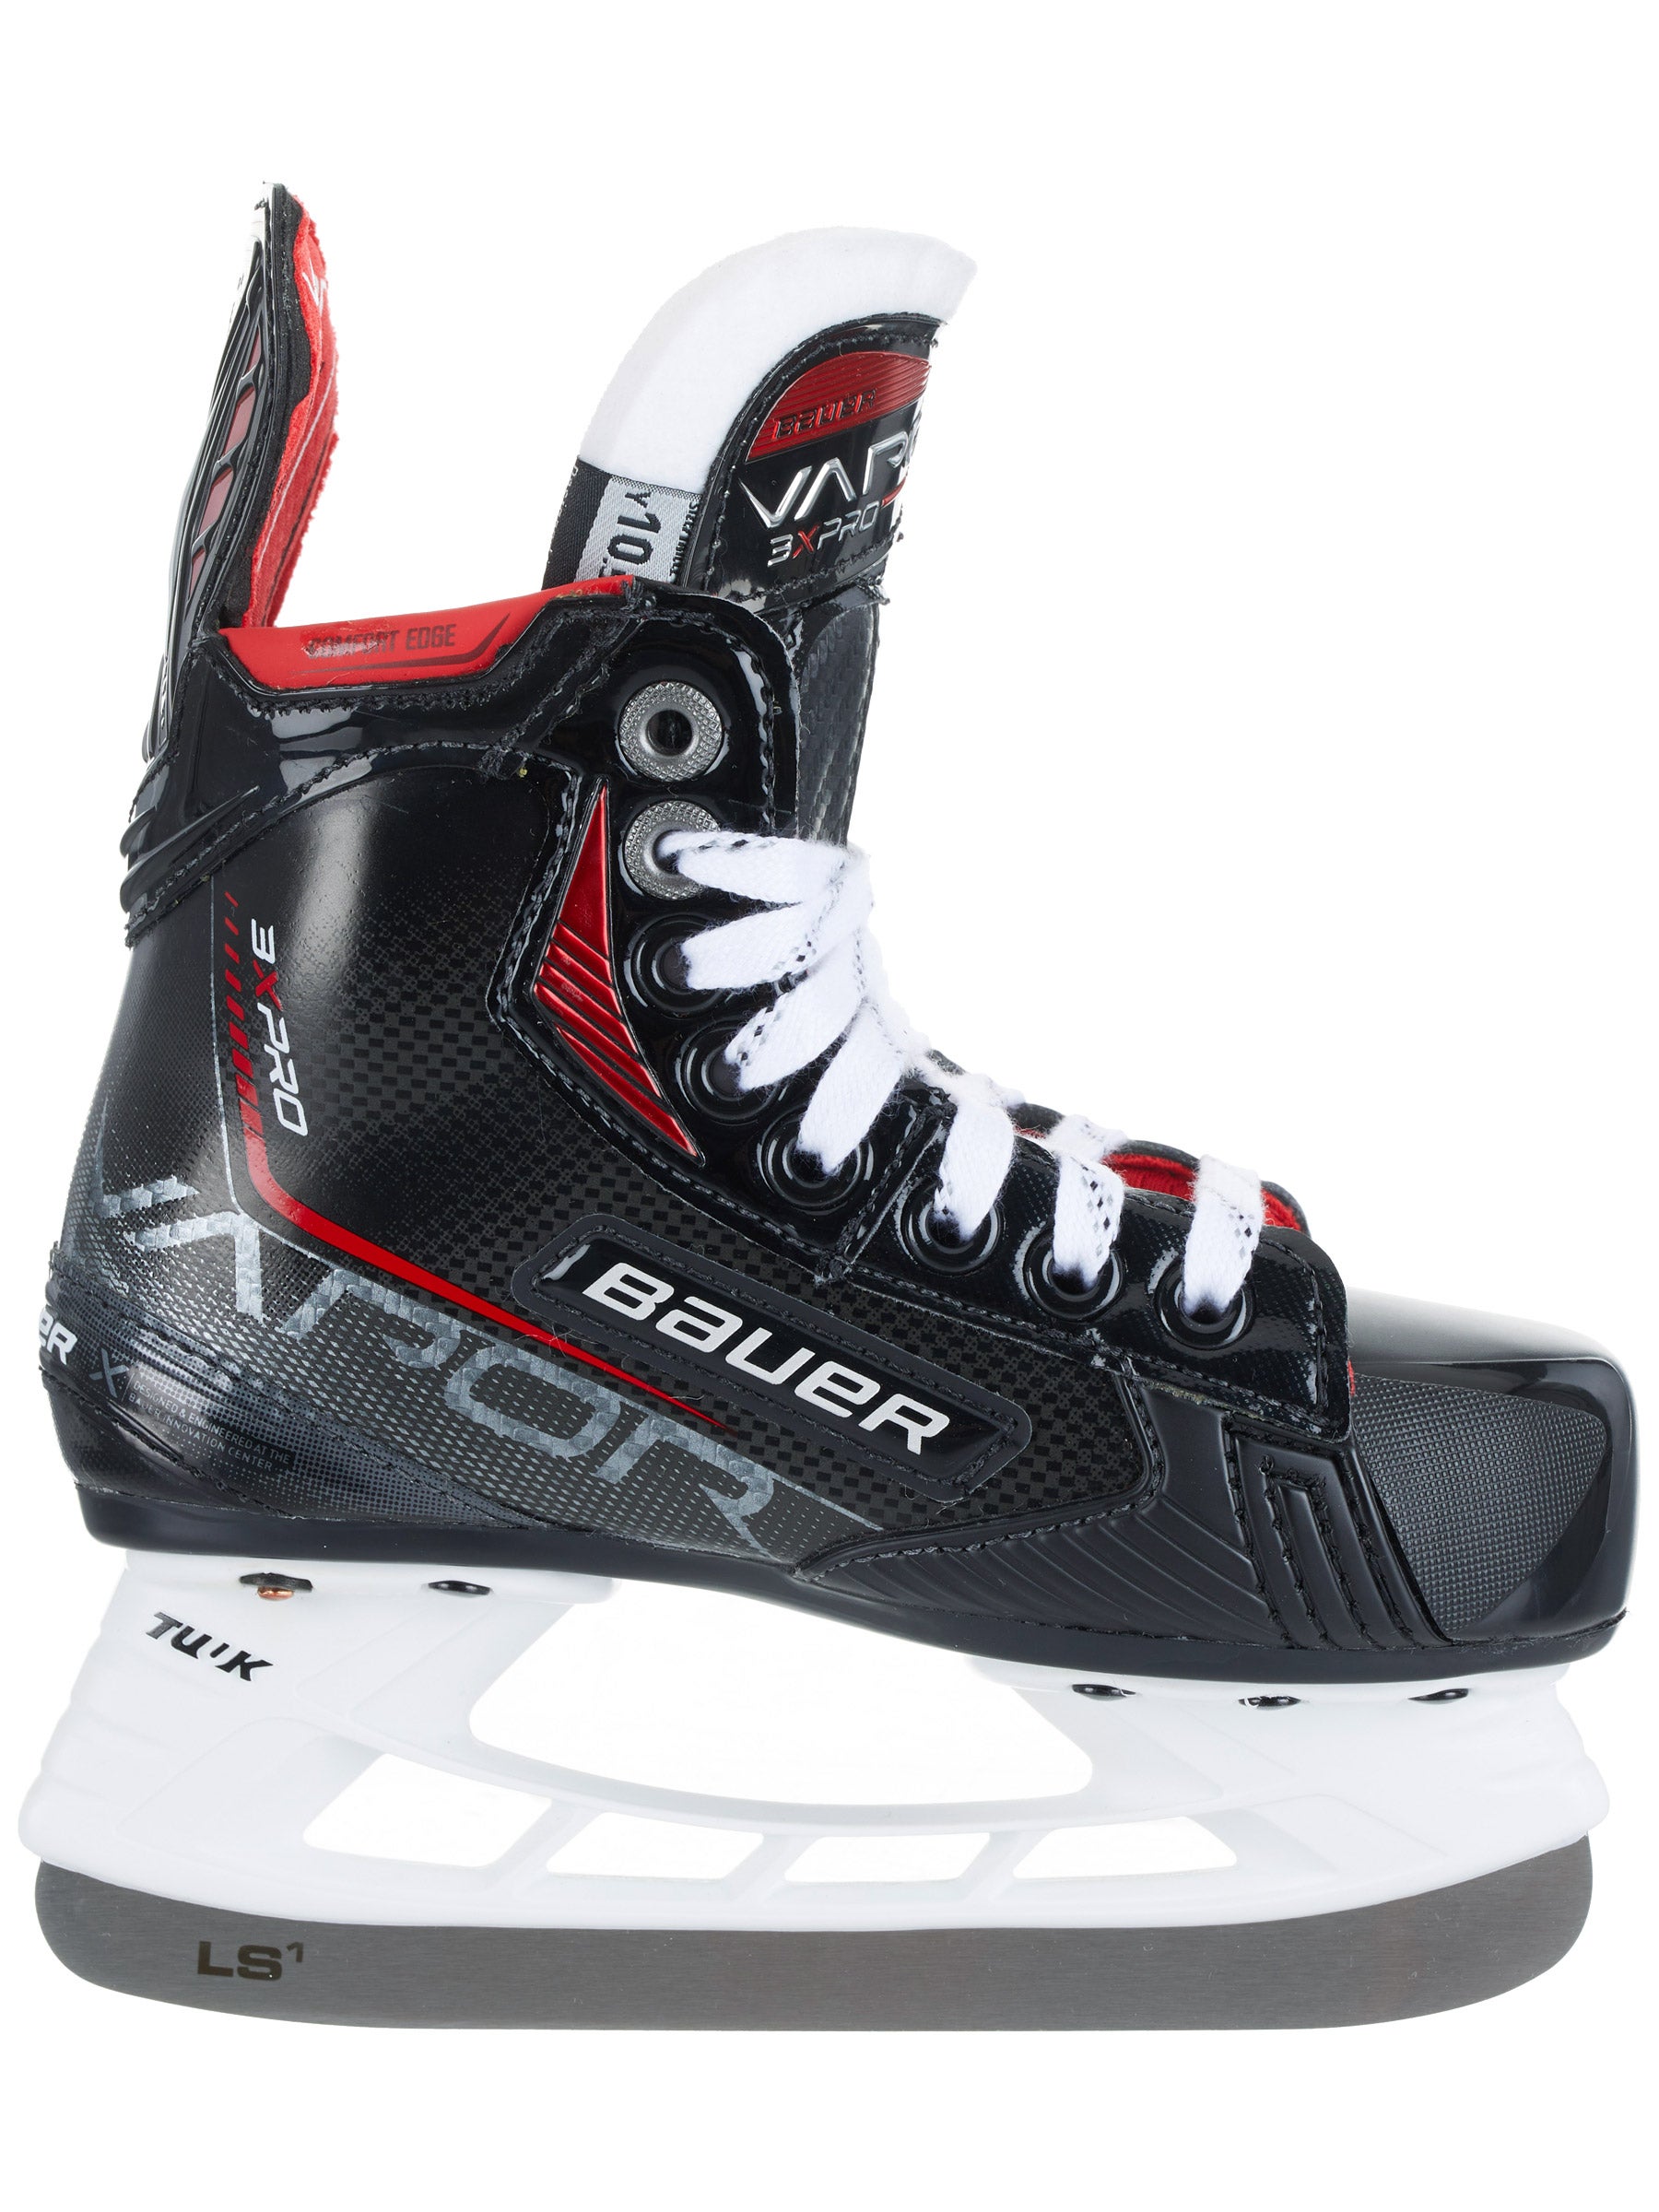 Details about   Bauer Supreme ONE20 LightSpeed Pro Tuuk Men’s Hockey Ice Skates Size US  3 